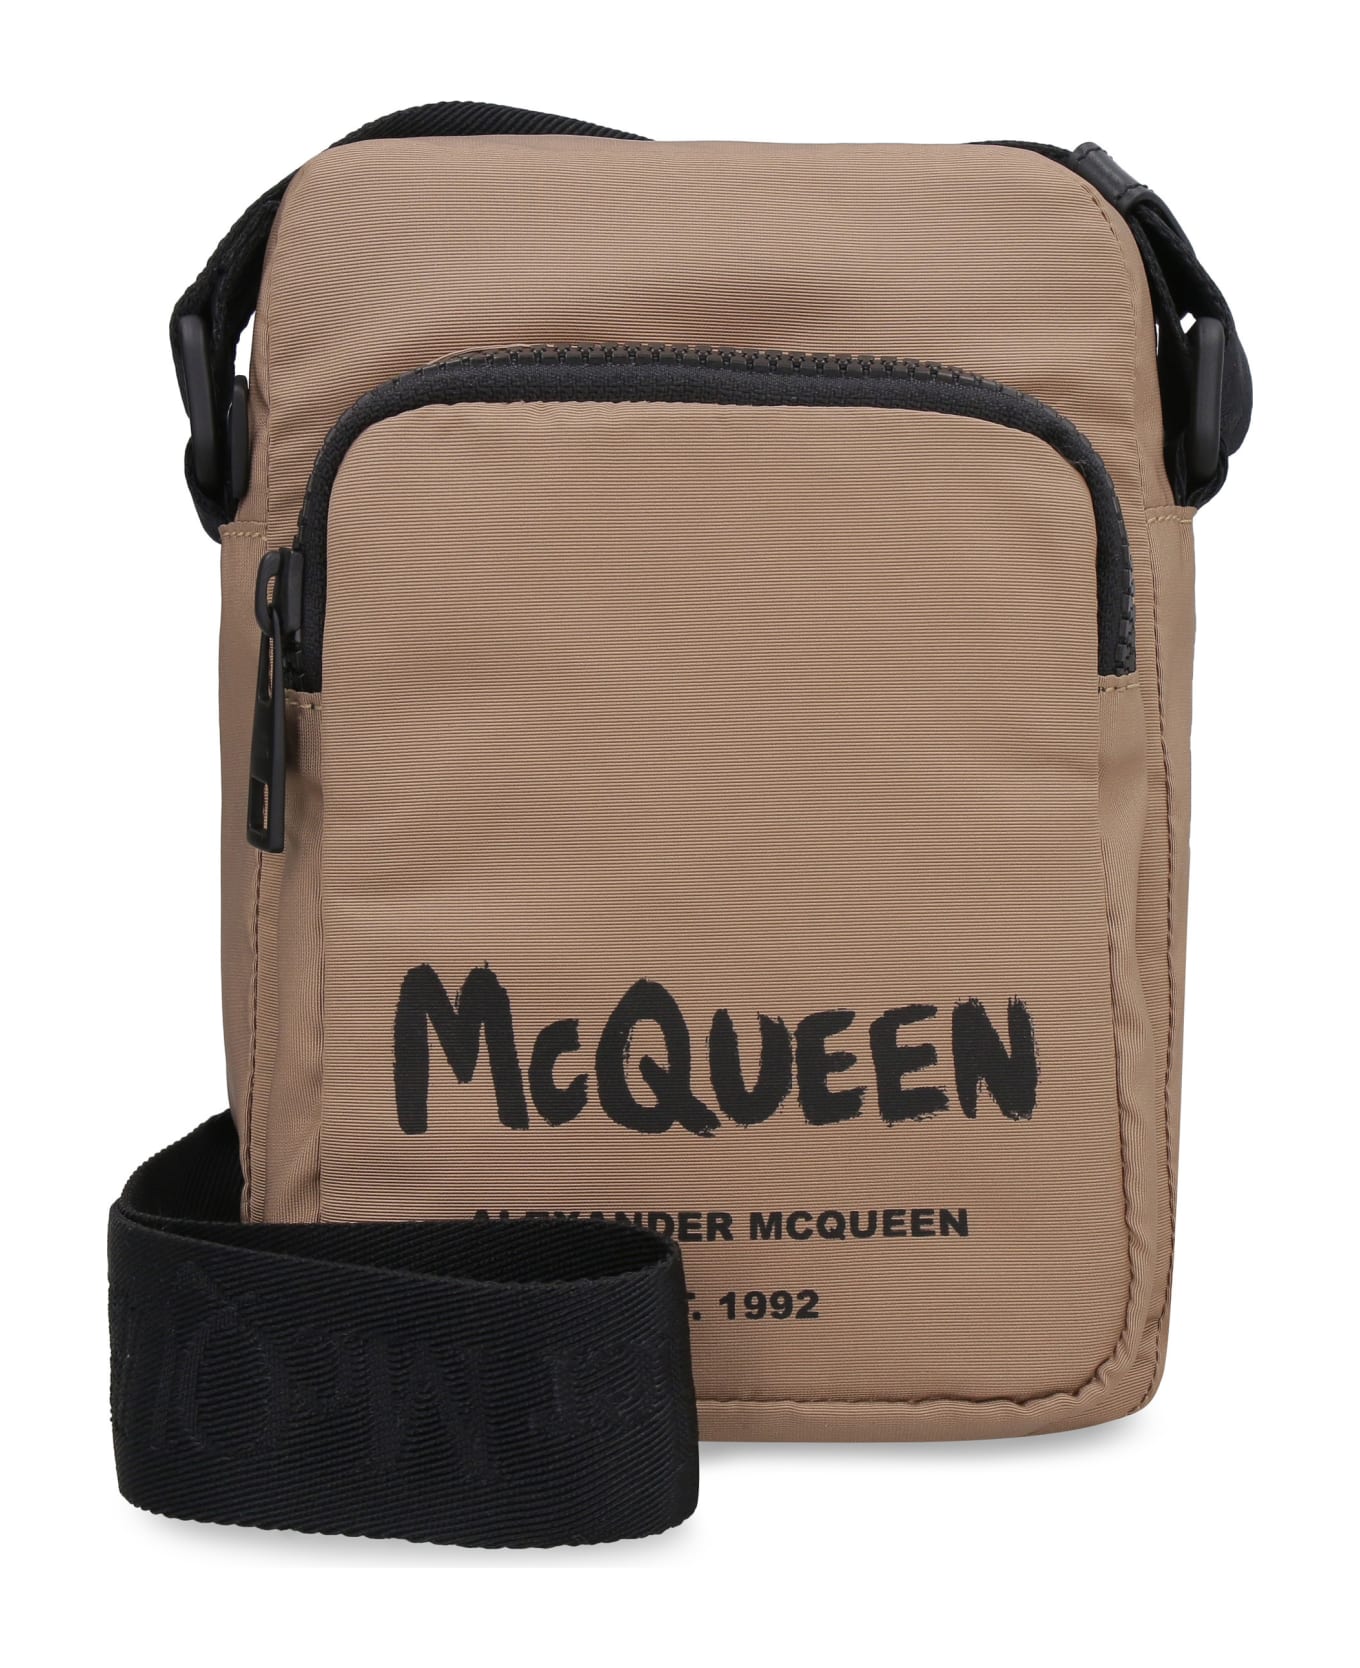 Alexander McQueen Mini Urban Biker Messenger Bag With Logo - Beige